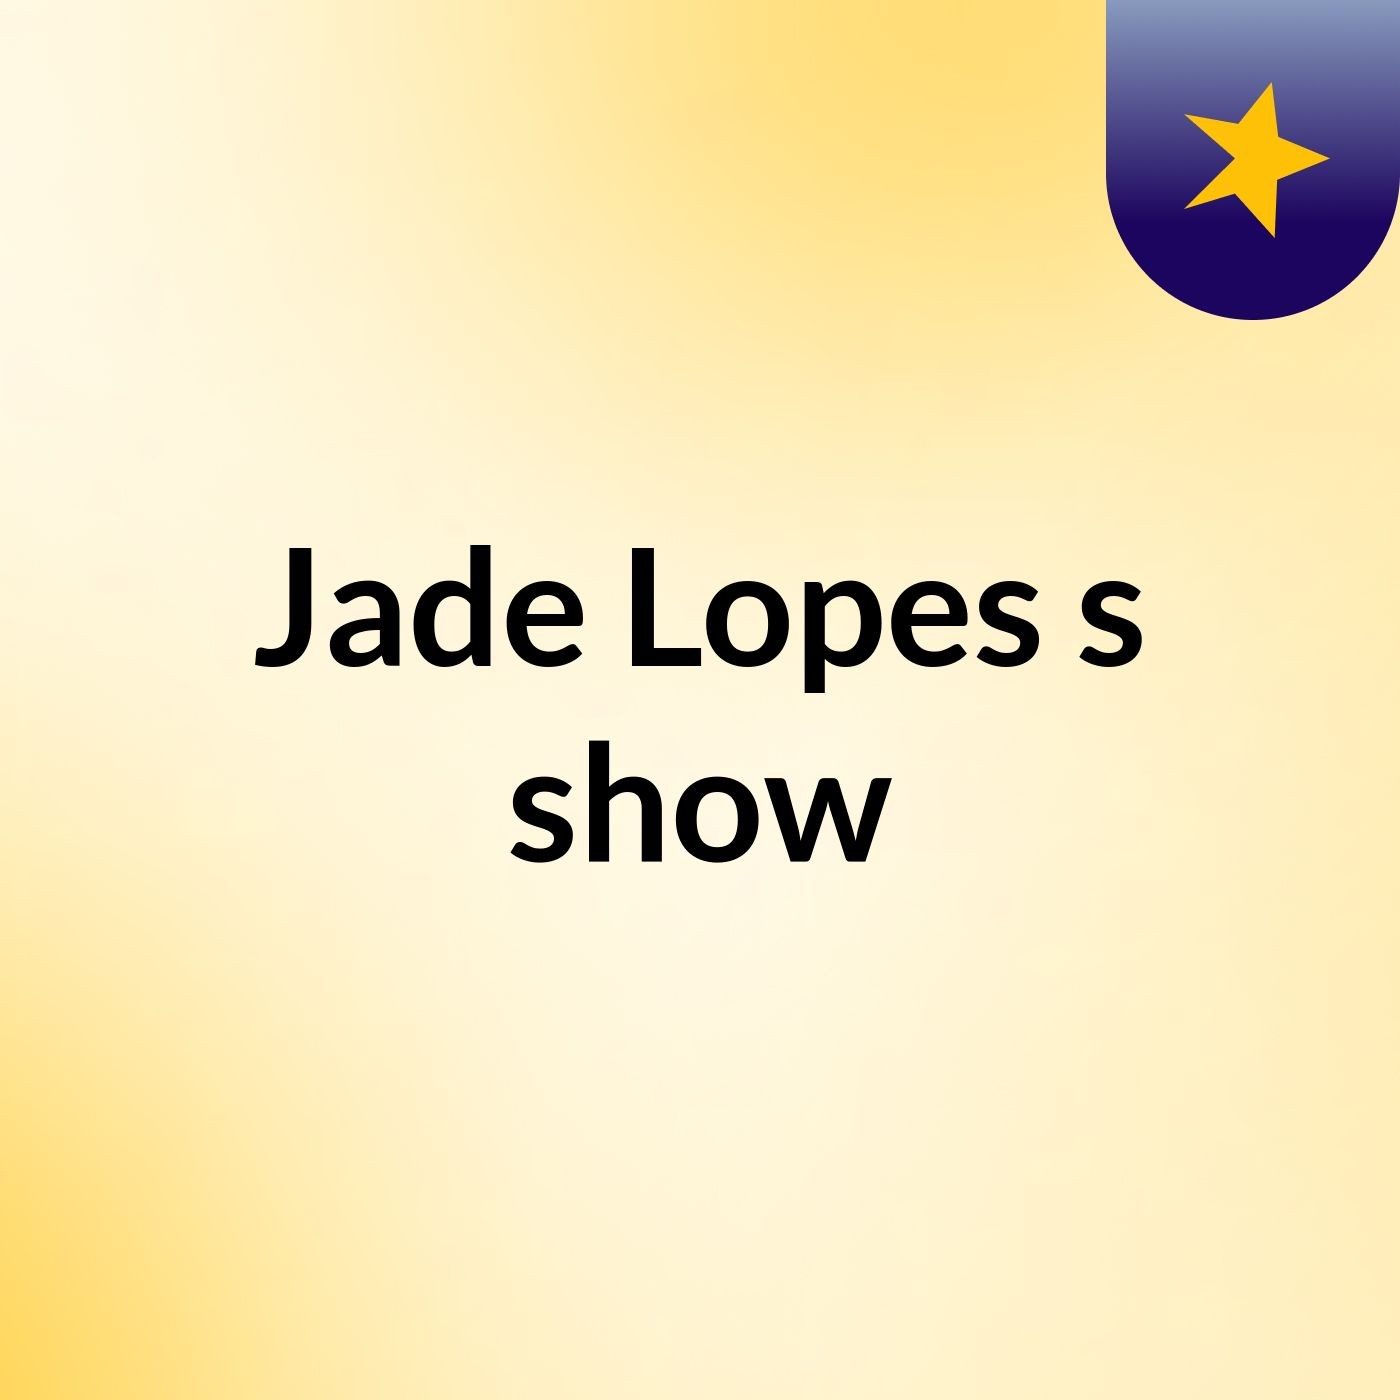 Jade Lopes's show